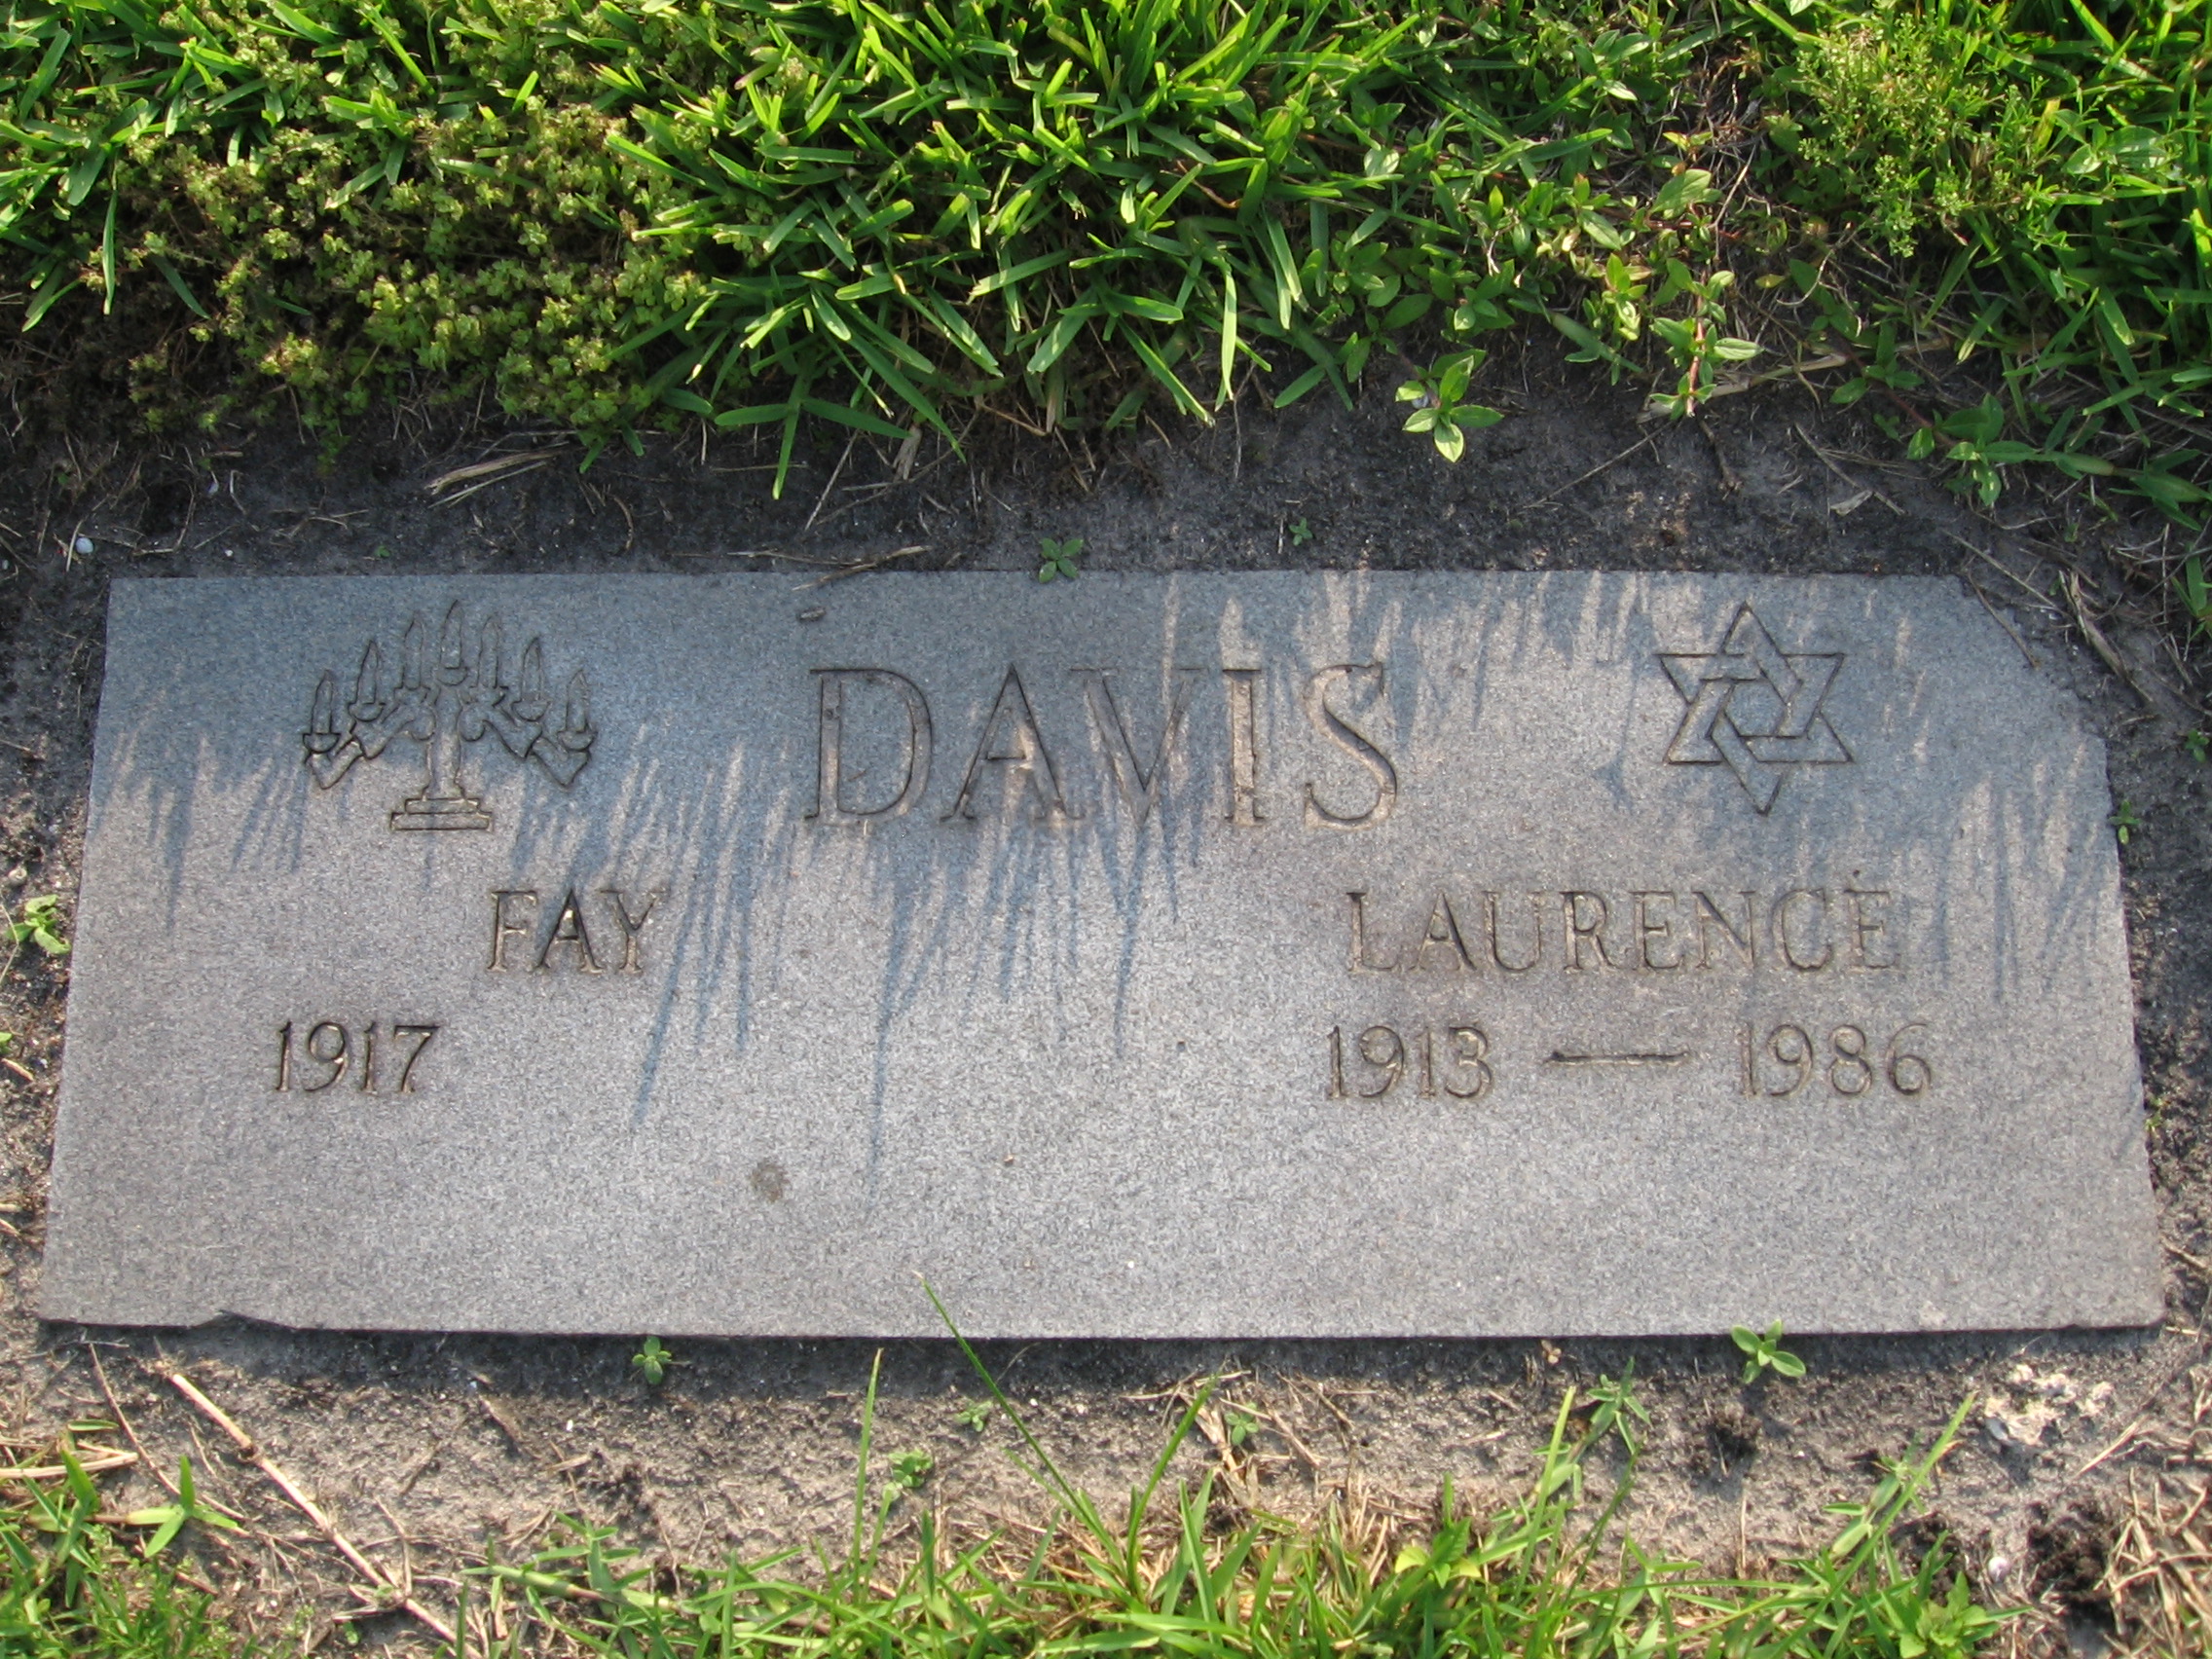 Laurence Davis